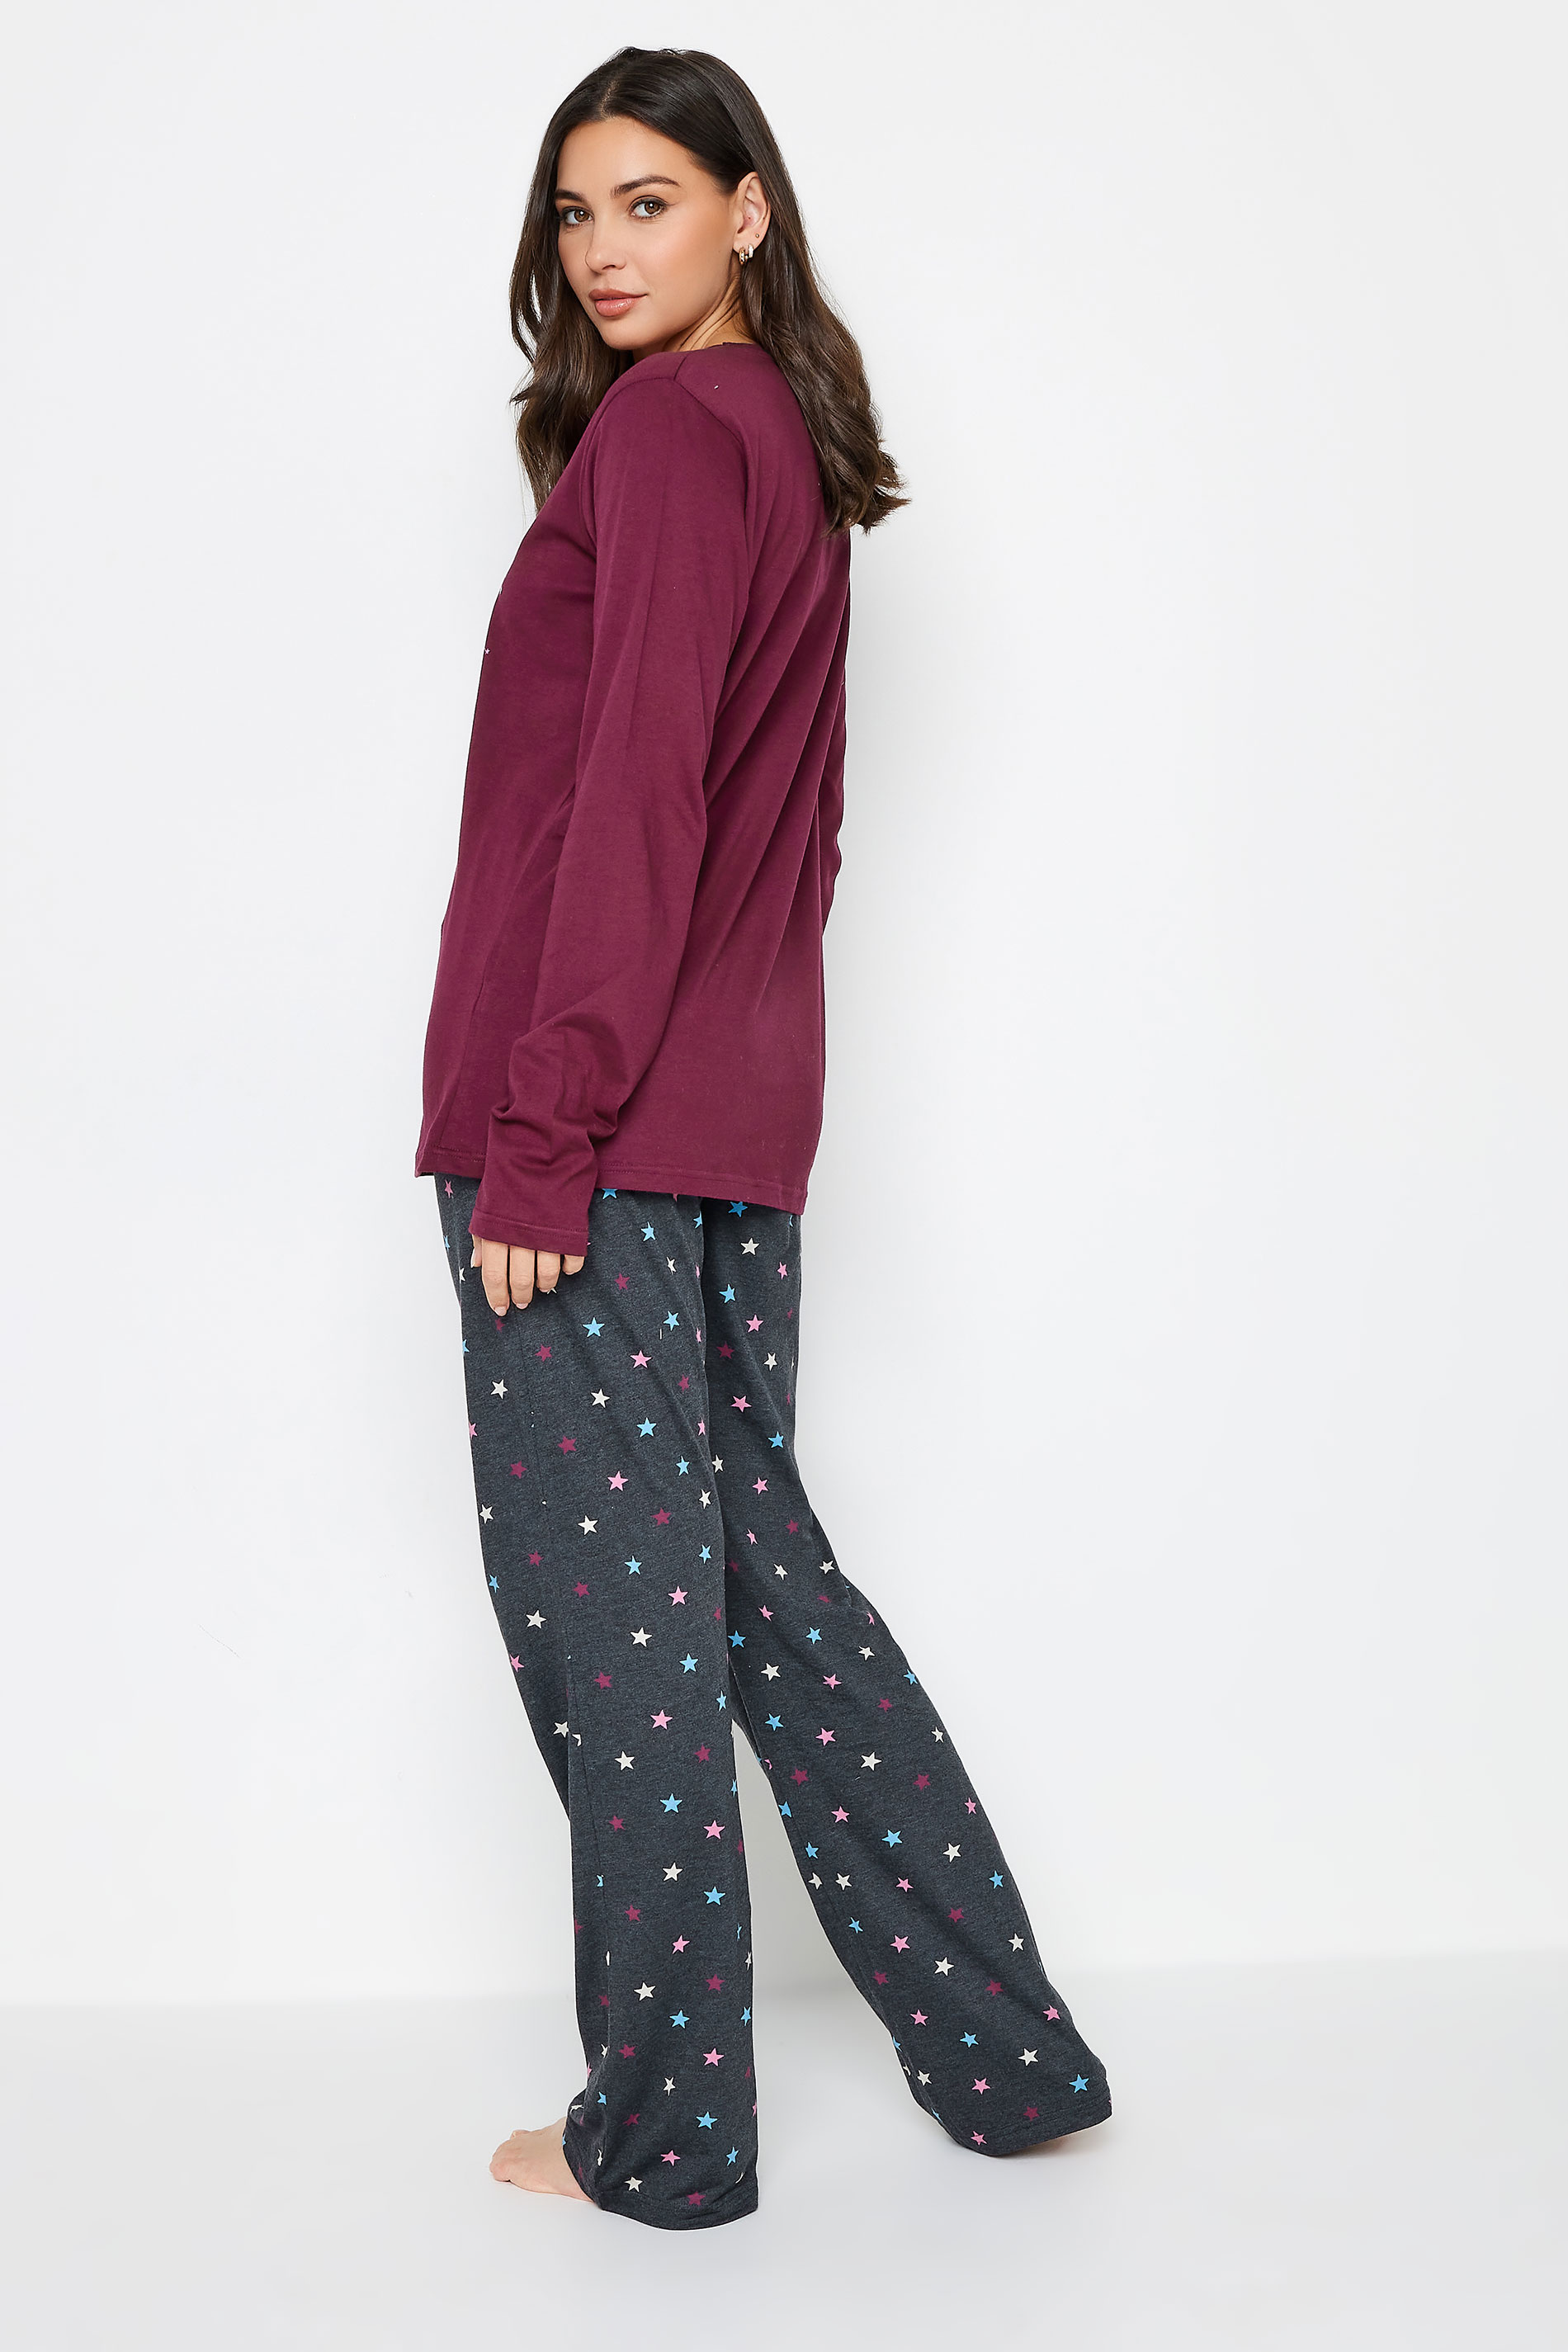 LTS Tall Red 'Look To The Stars' Wide Leg Pyjama Set | Long Tall Sally  3